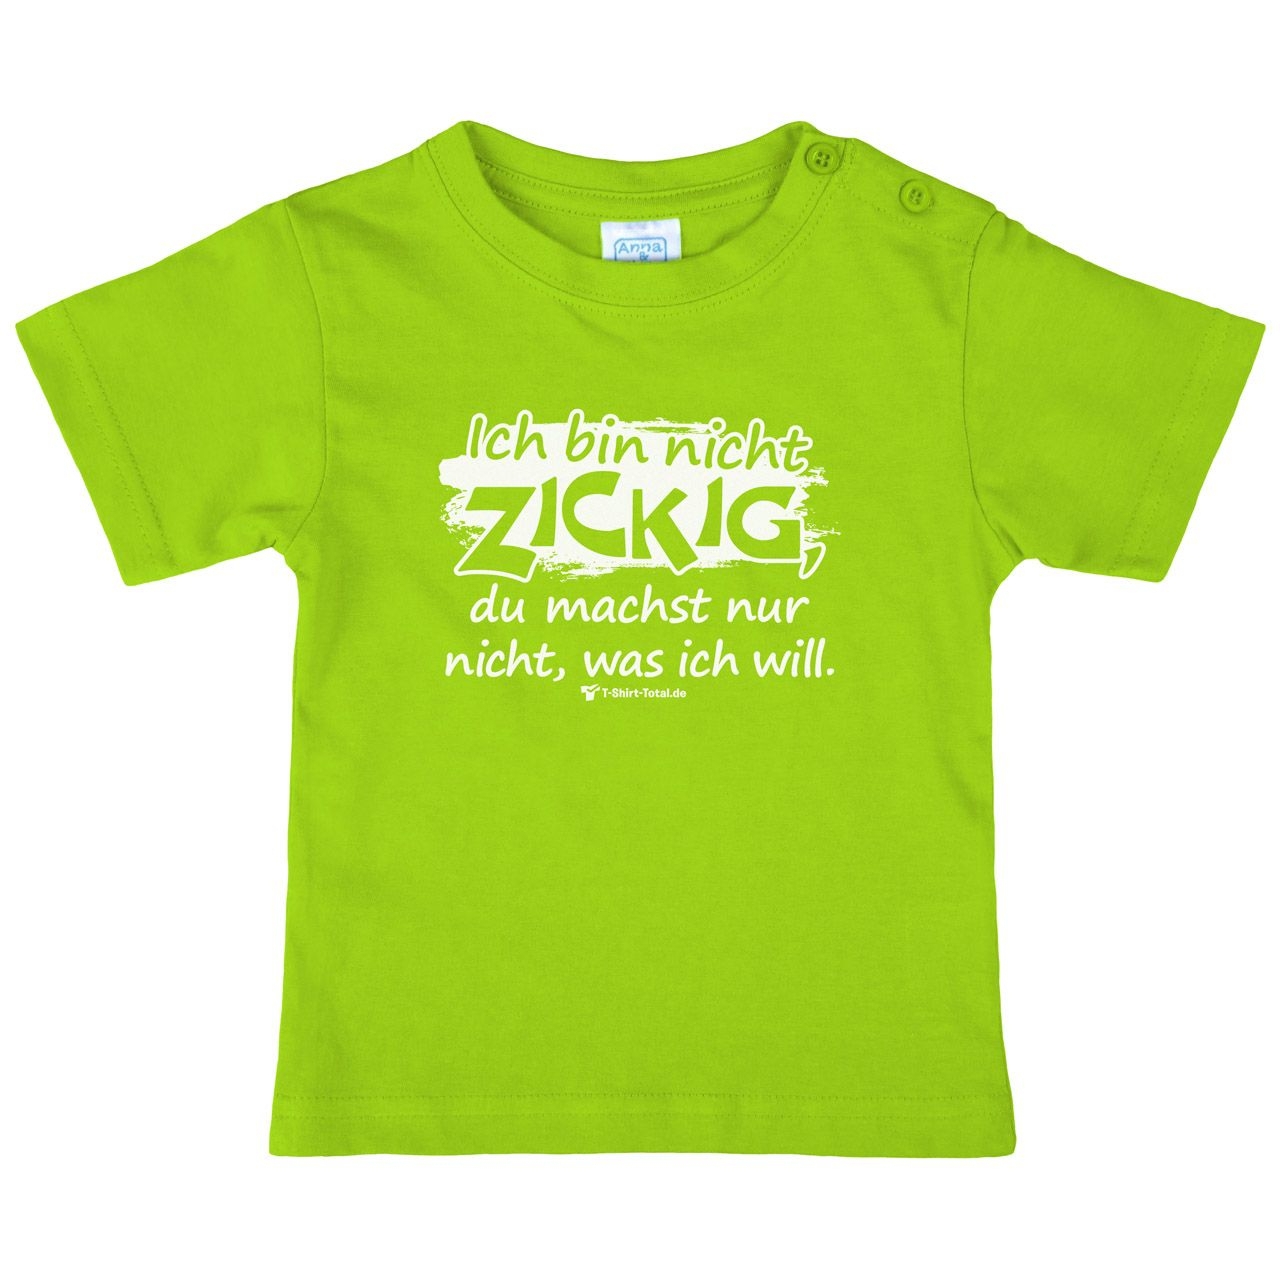 Bin nicht zickig Kinder T-Shirt hellgrün 92